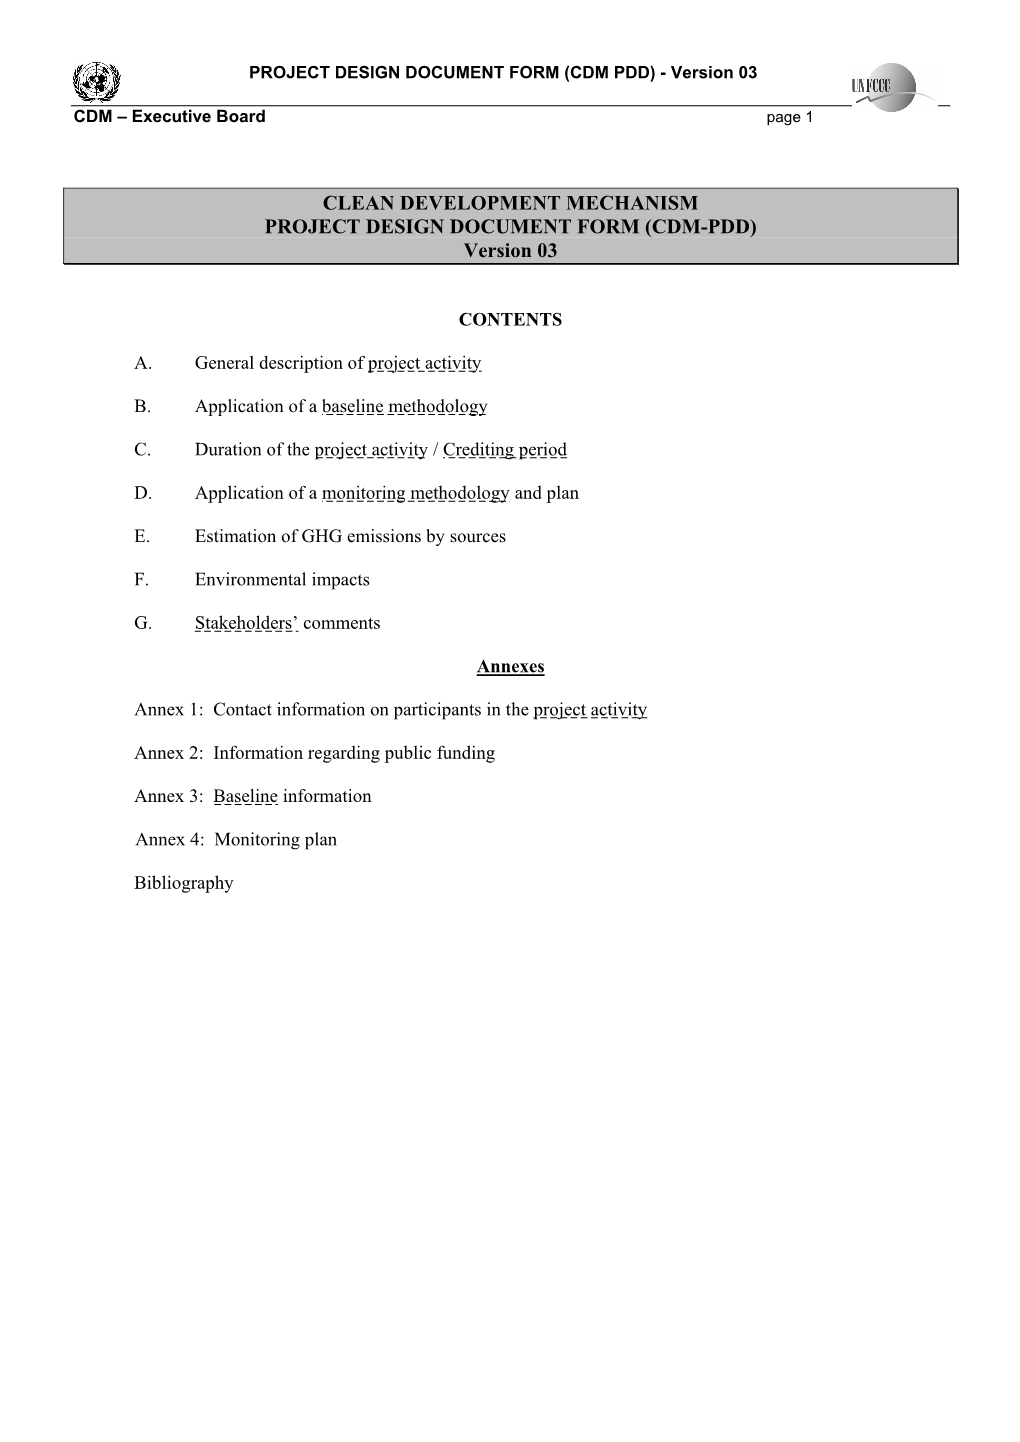 CLEAN DEVELOPMENT MECHANISM PROJECT DESIGN DOCUMENT FORM (CDM-PDD) Version 03